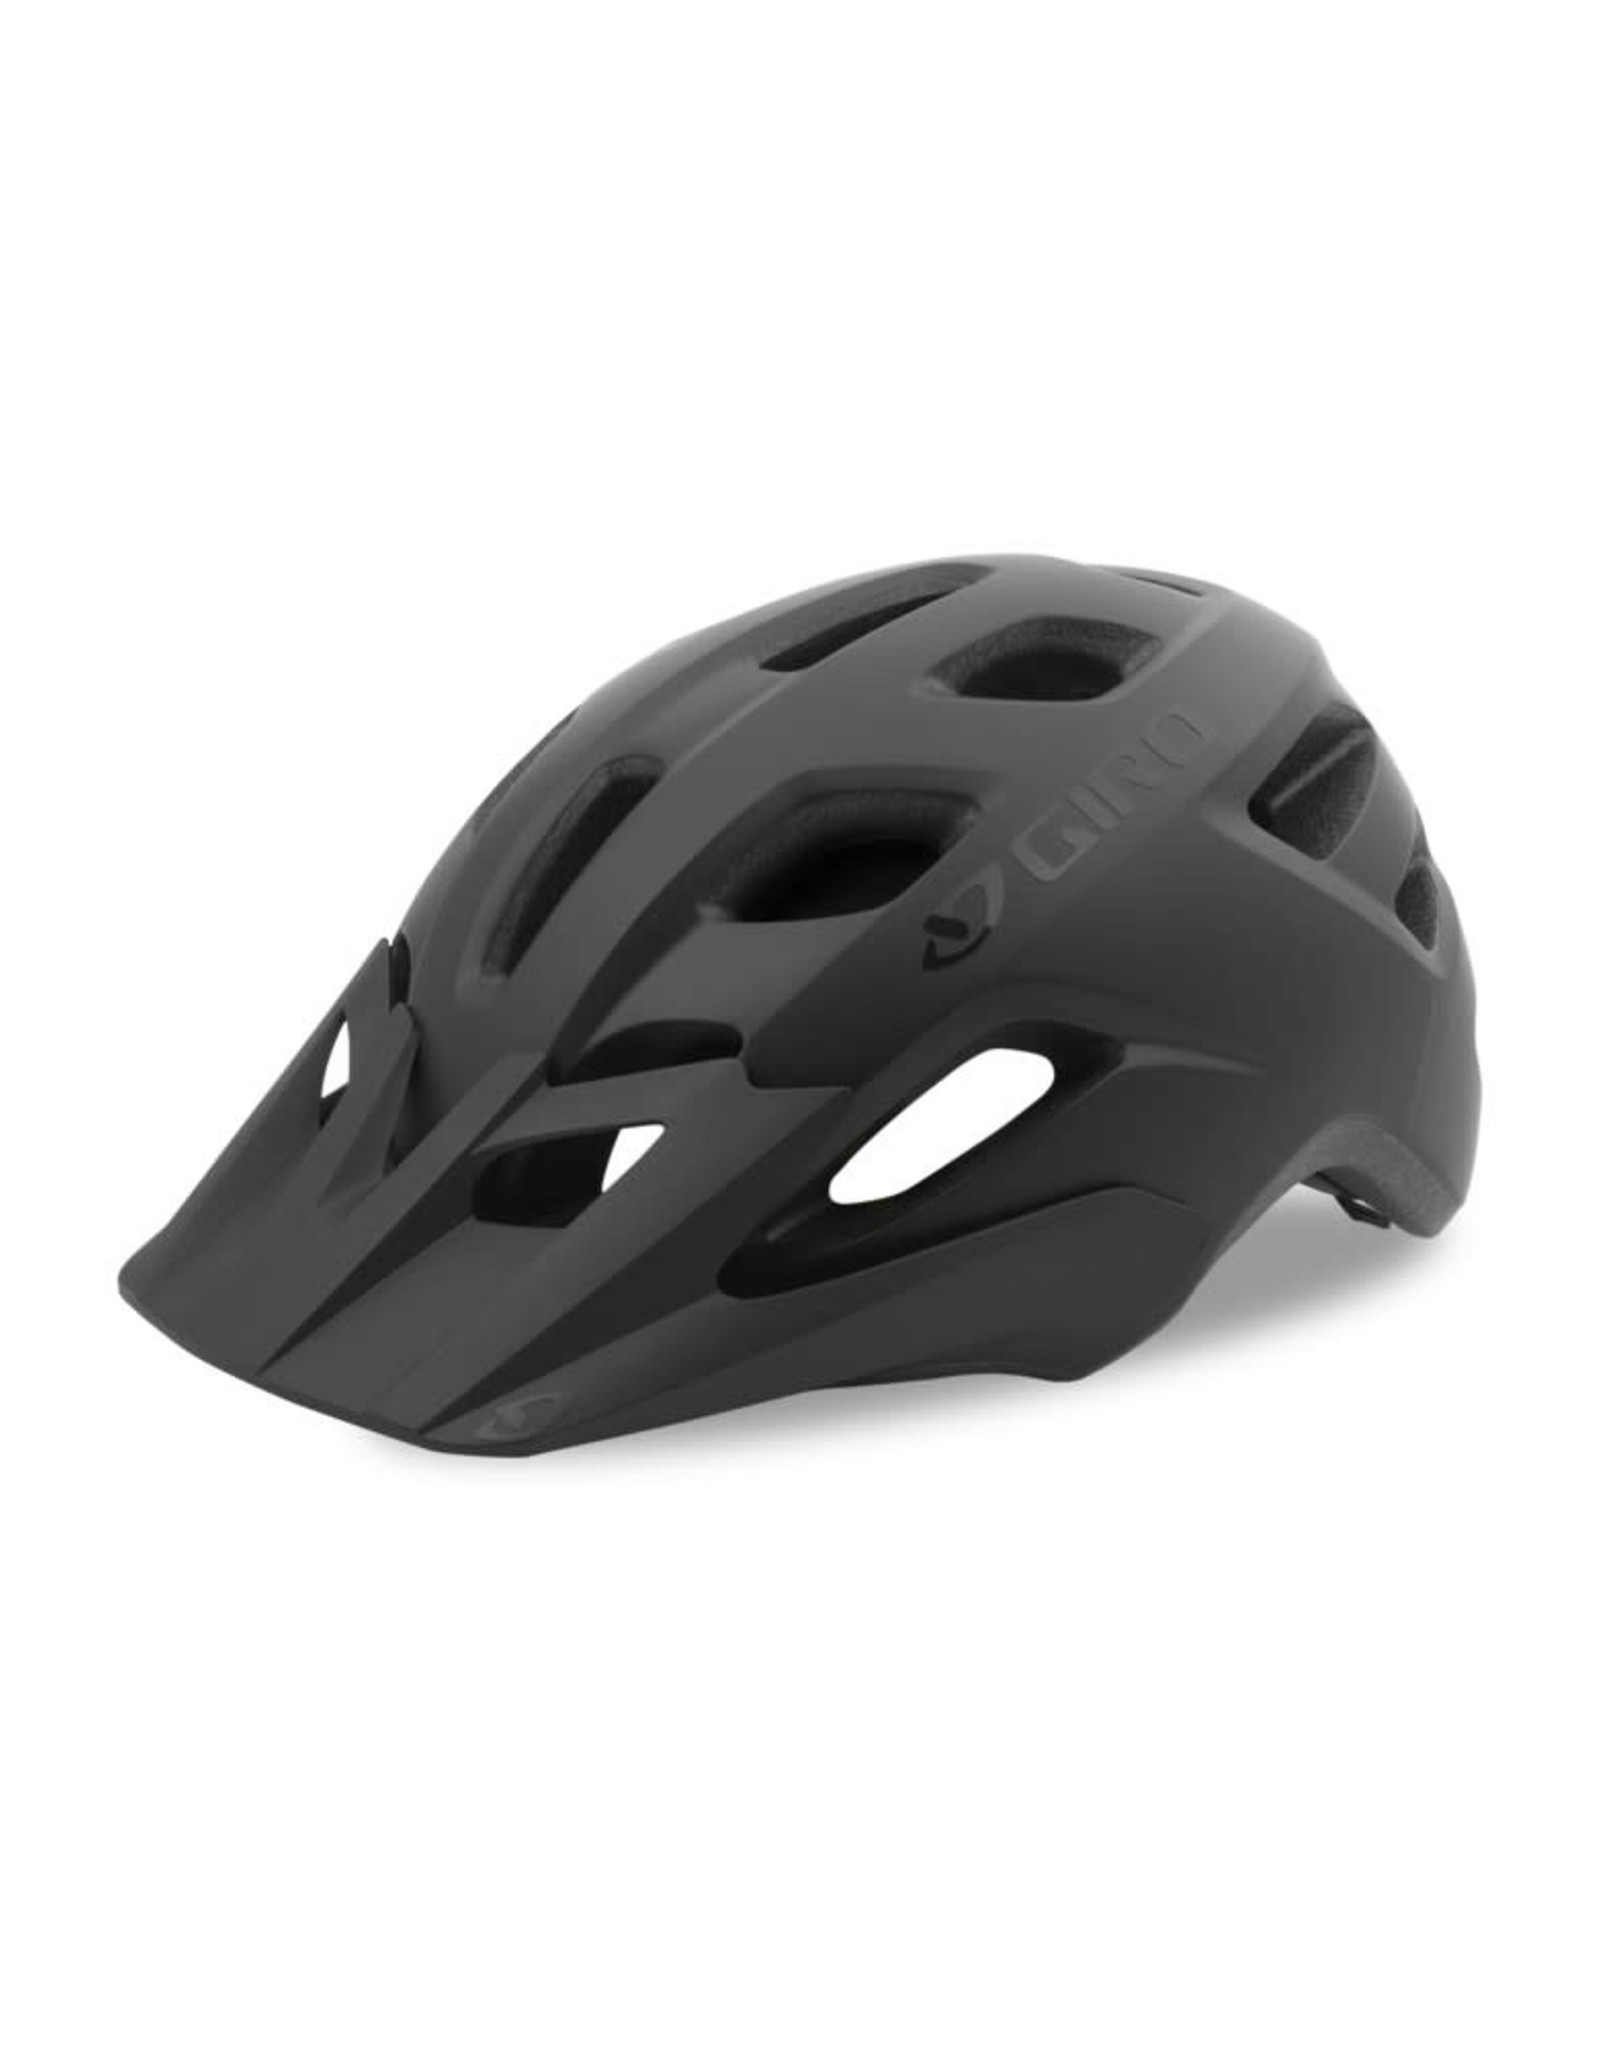 GIRO Compound MIPS - Fixture MIPS XL Helmet